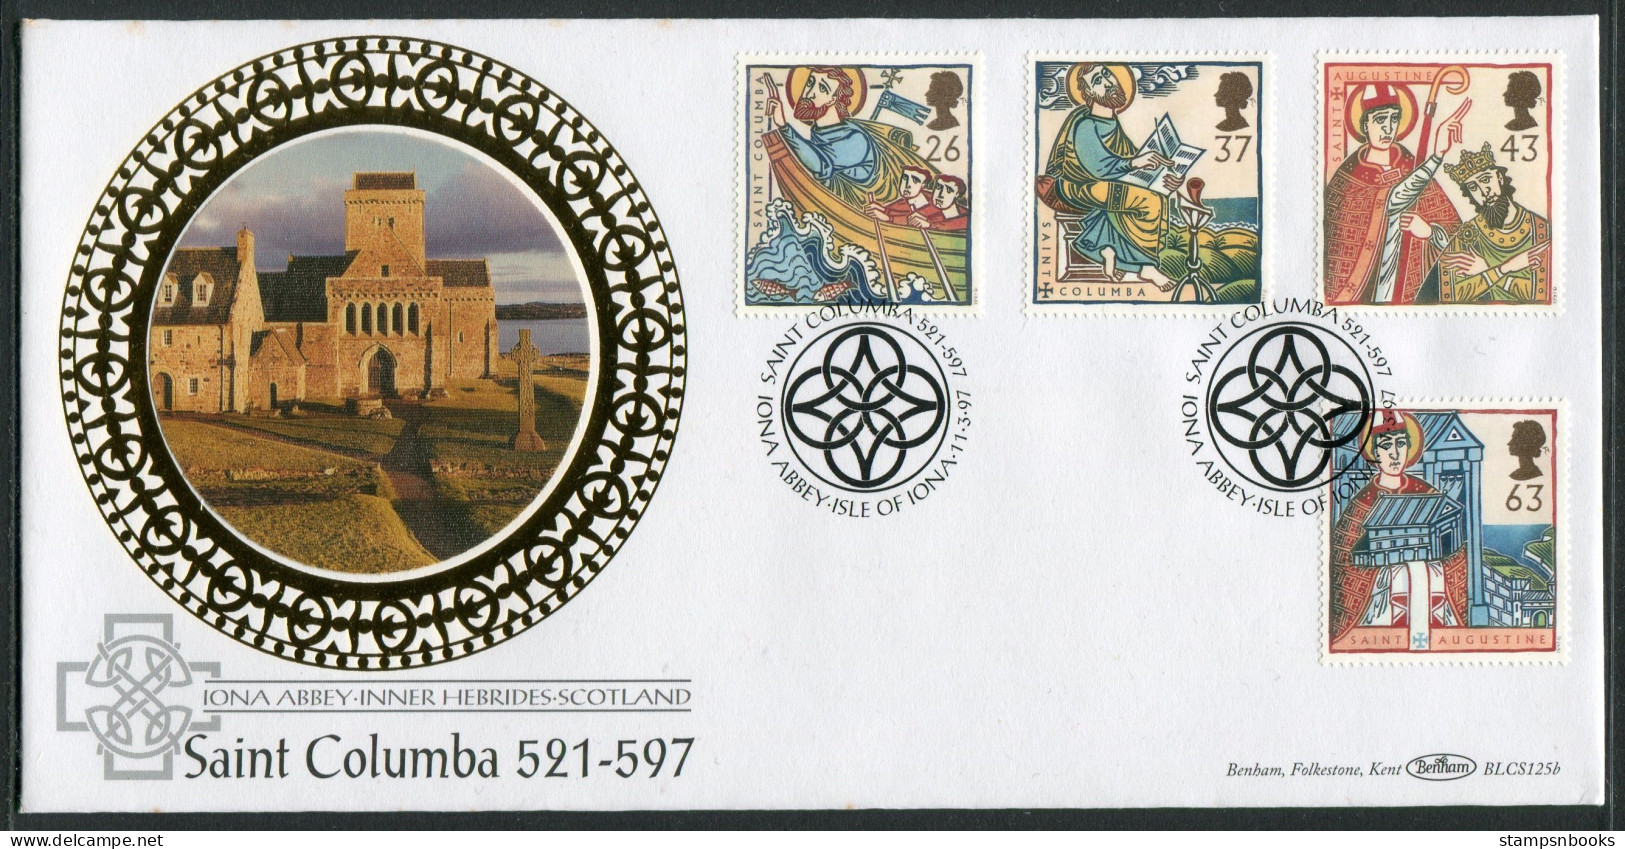 1997 GB Missions Of Faith First Day Cover, Saint Columba, Iona Abbey, Scotland Benham BLCS 125b FDC - 1991-2000 Em. Décimales